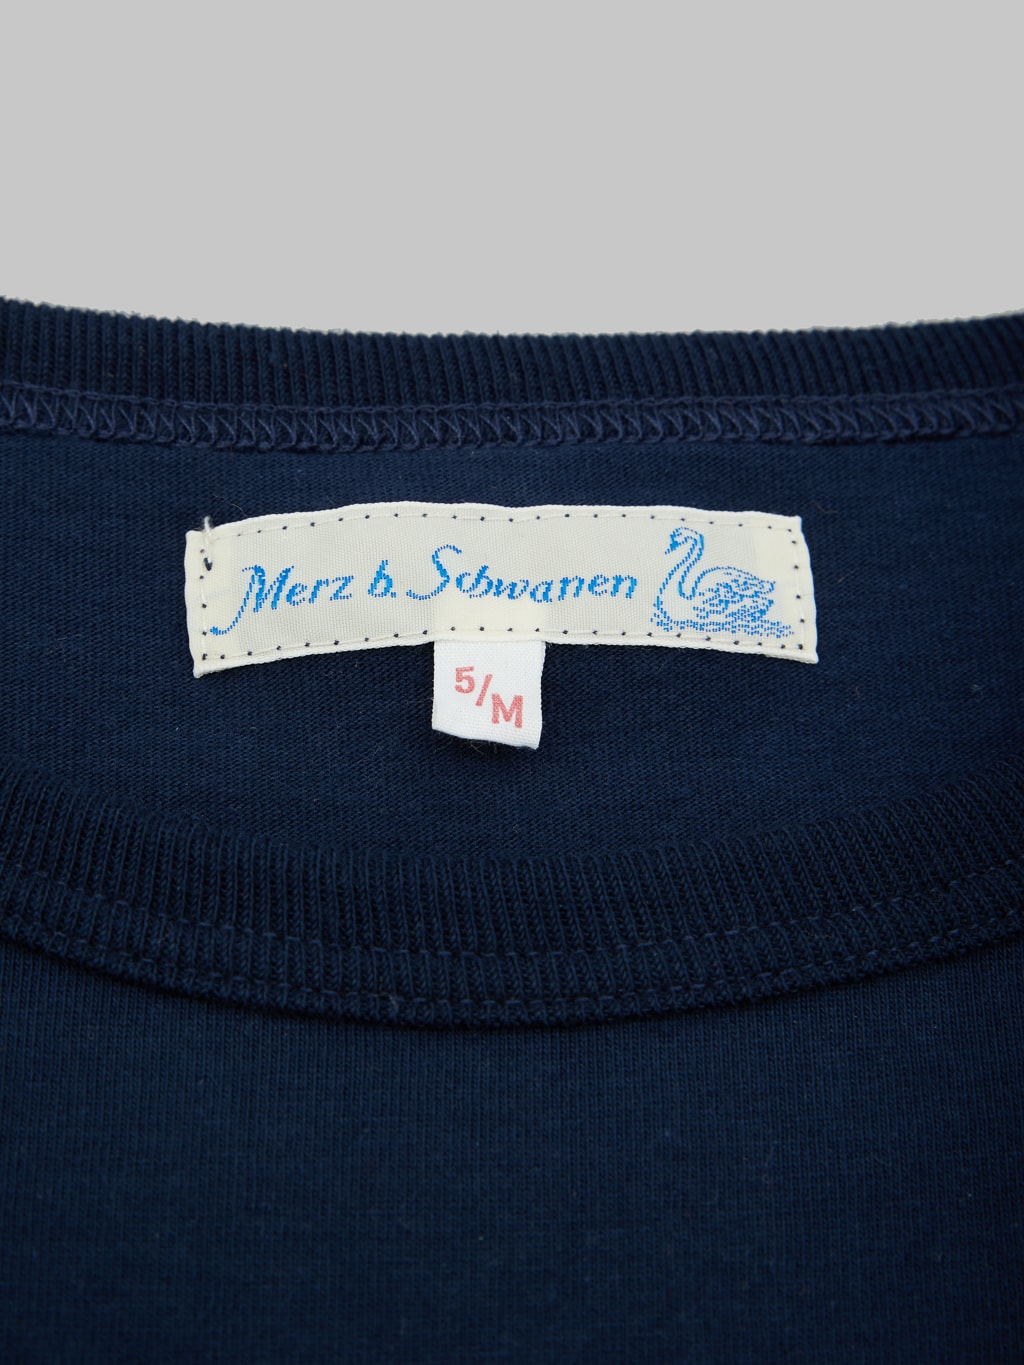 Merz b Schwanen 1950s Loopwheeled Classic Fit TShirt ink blue size label